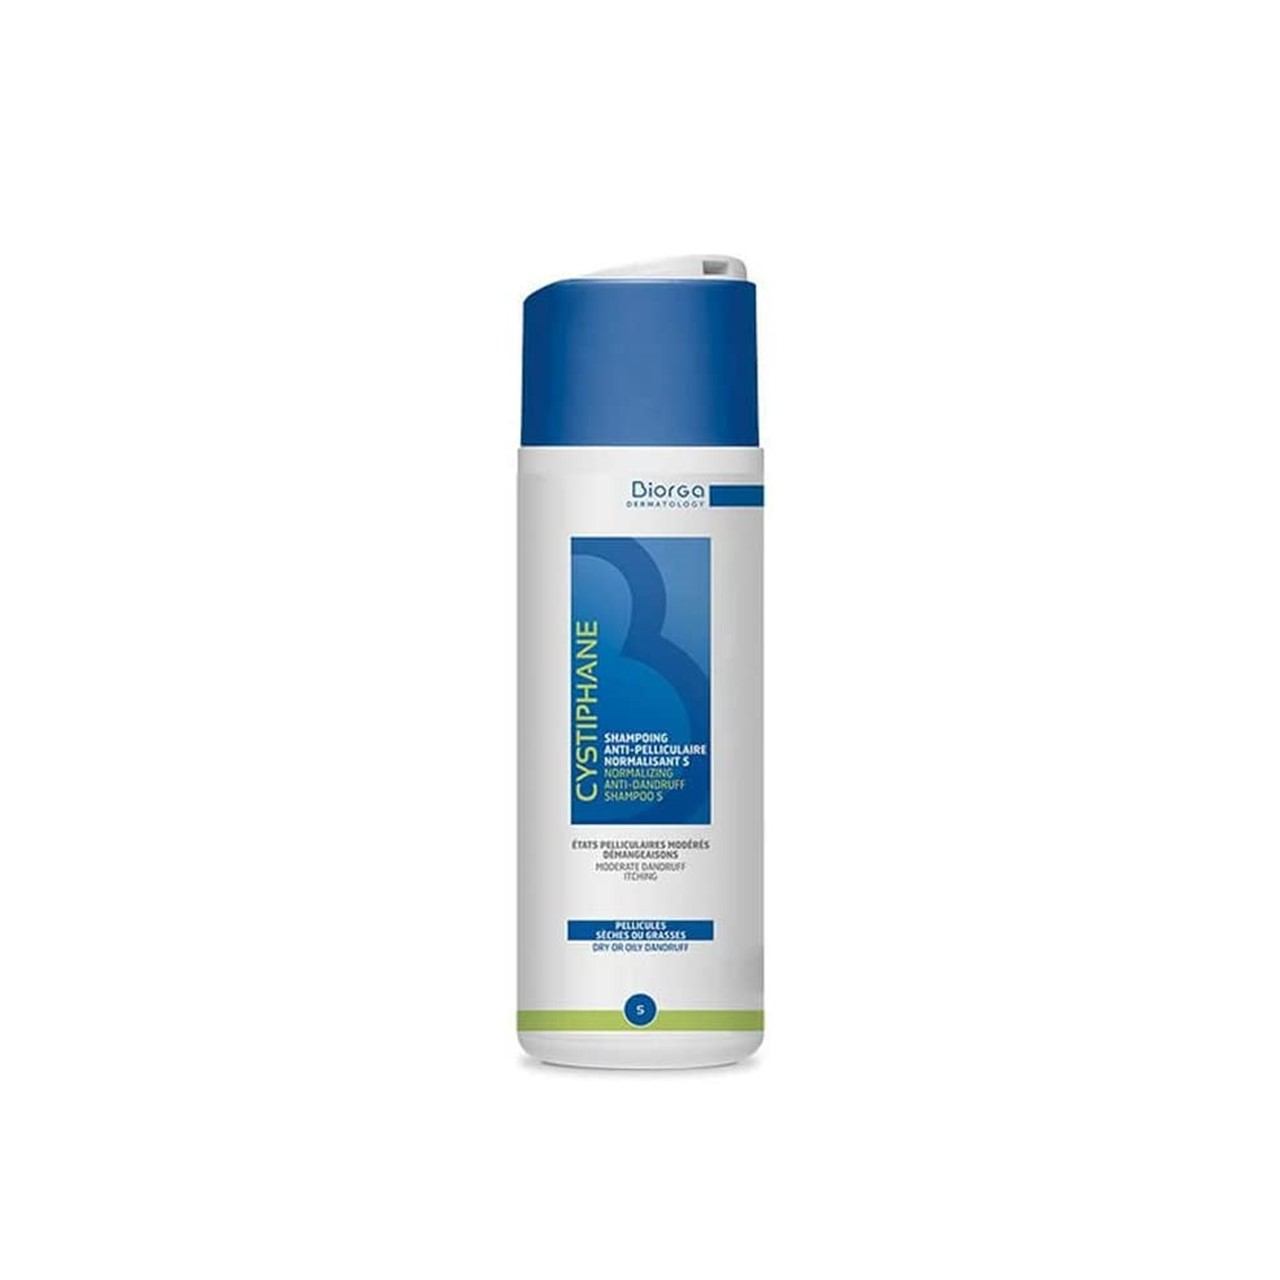 Cystiphane Biorga Anti-Dandruff Normalising S Shampoo 200ml